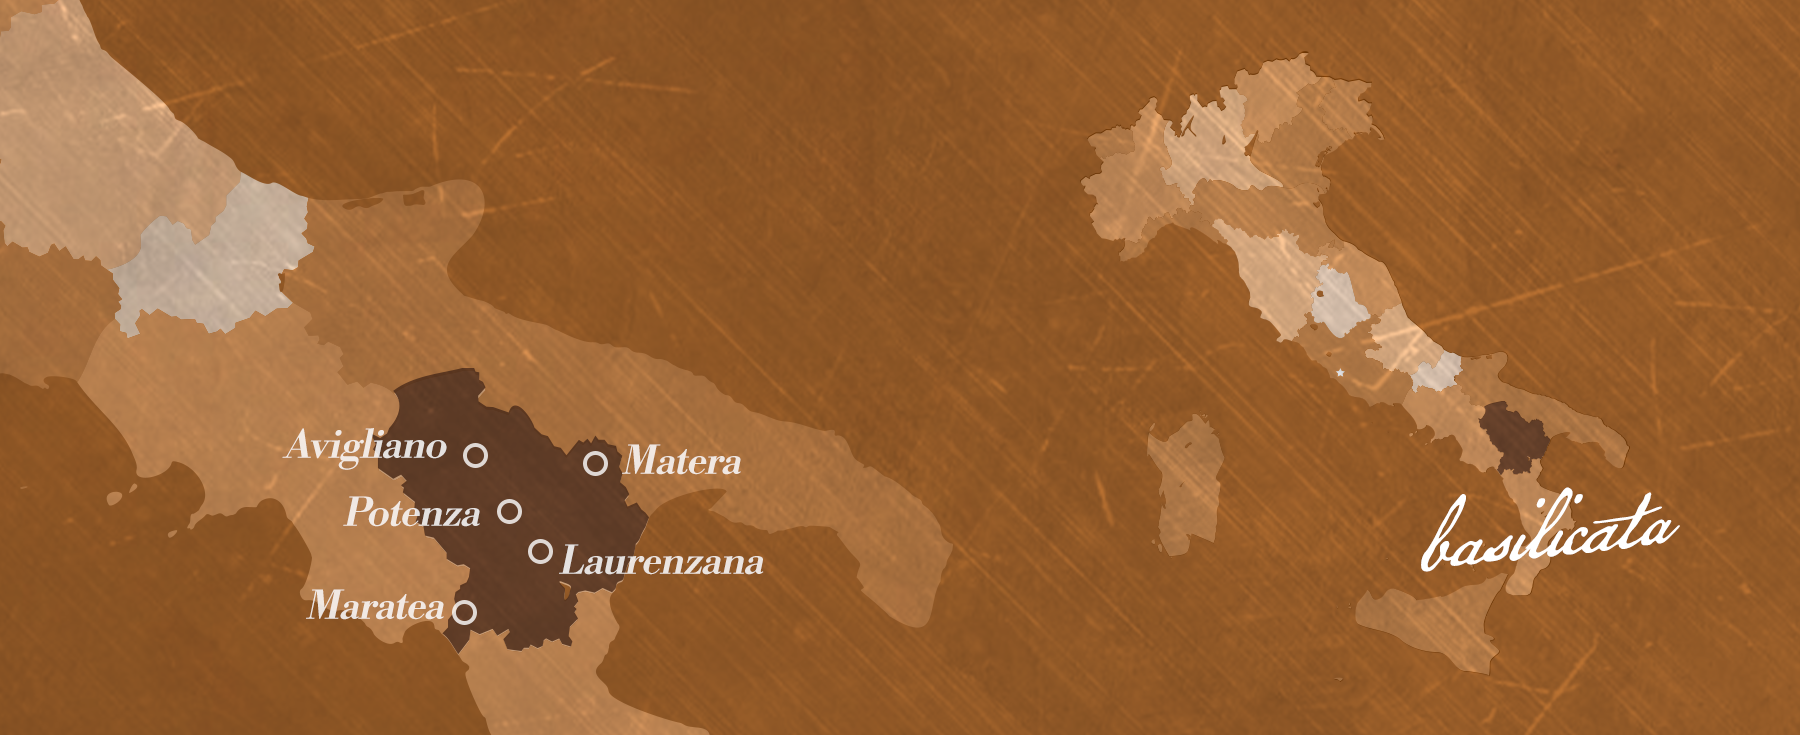 Let us take you on a journey to Basilicata!